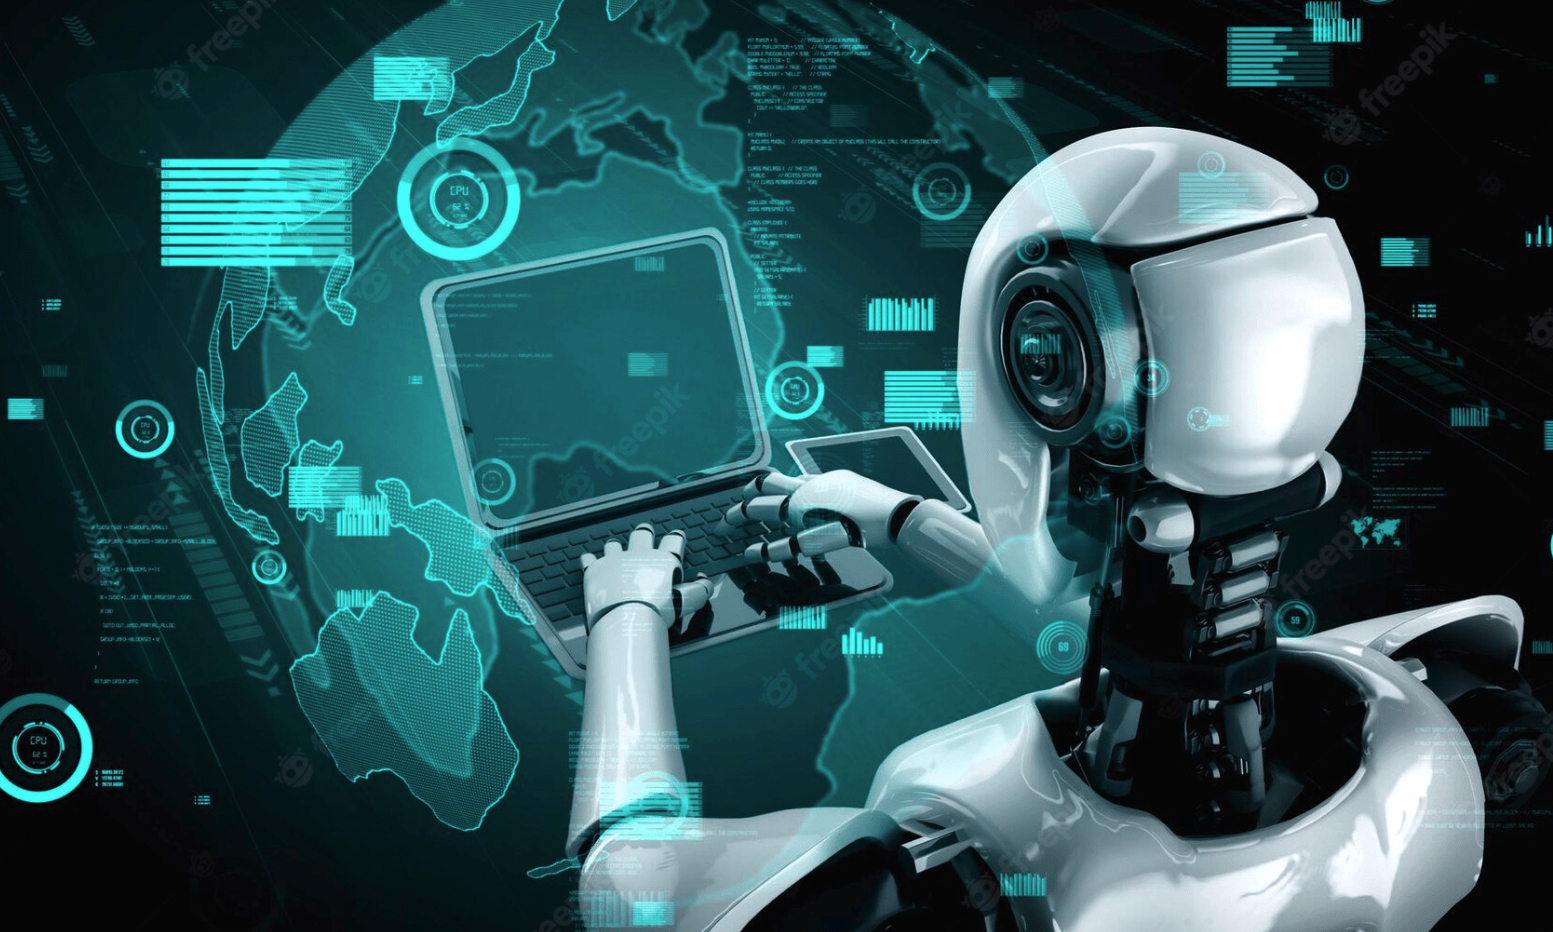 Bot Trade Center - เป็นตัวแทนจำหน่ายและกลุ่มผู้พัฒนา Expert Advisor (EA) (AI Bottrade) ระบบลงทุนอัตโนมัติ (Robot Trade) อัจฉริยะ